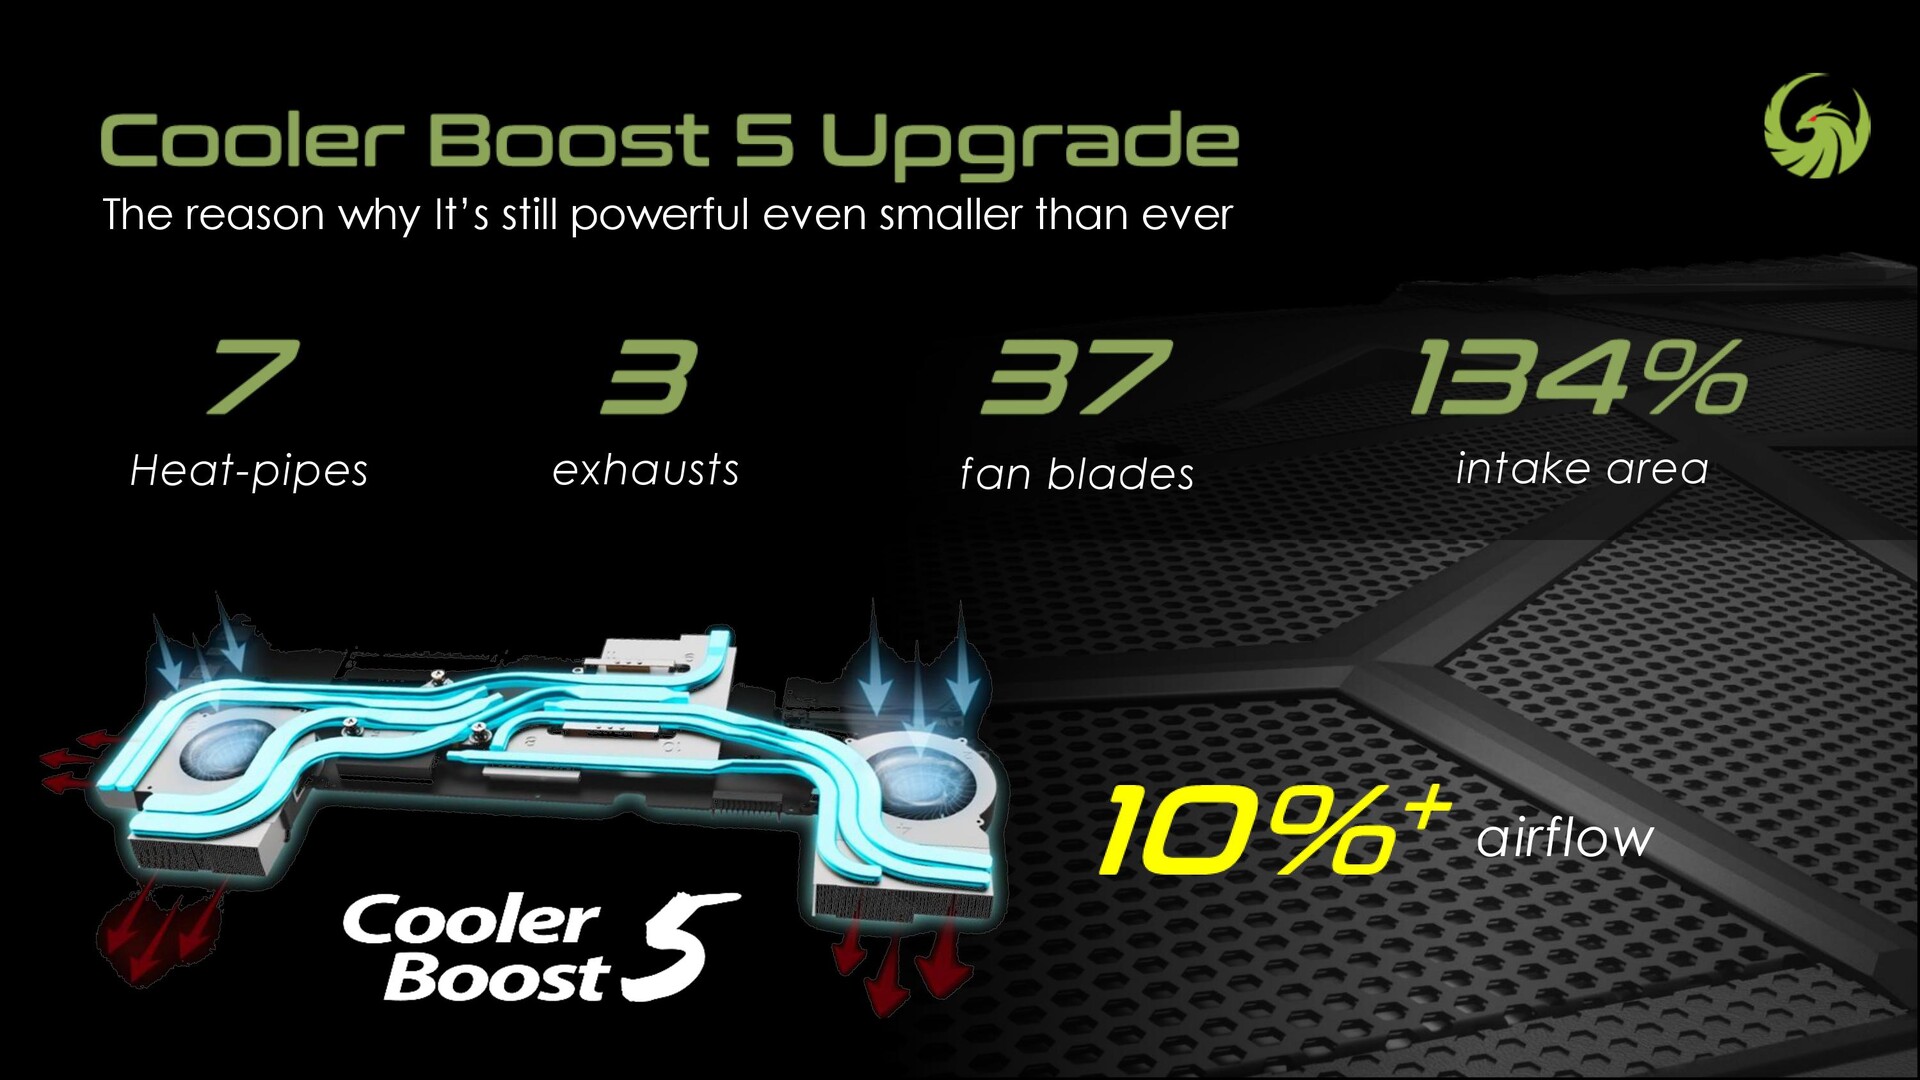 Msi Cooler Boost 4 Vs 5 - Bios Pics